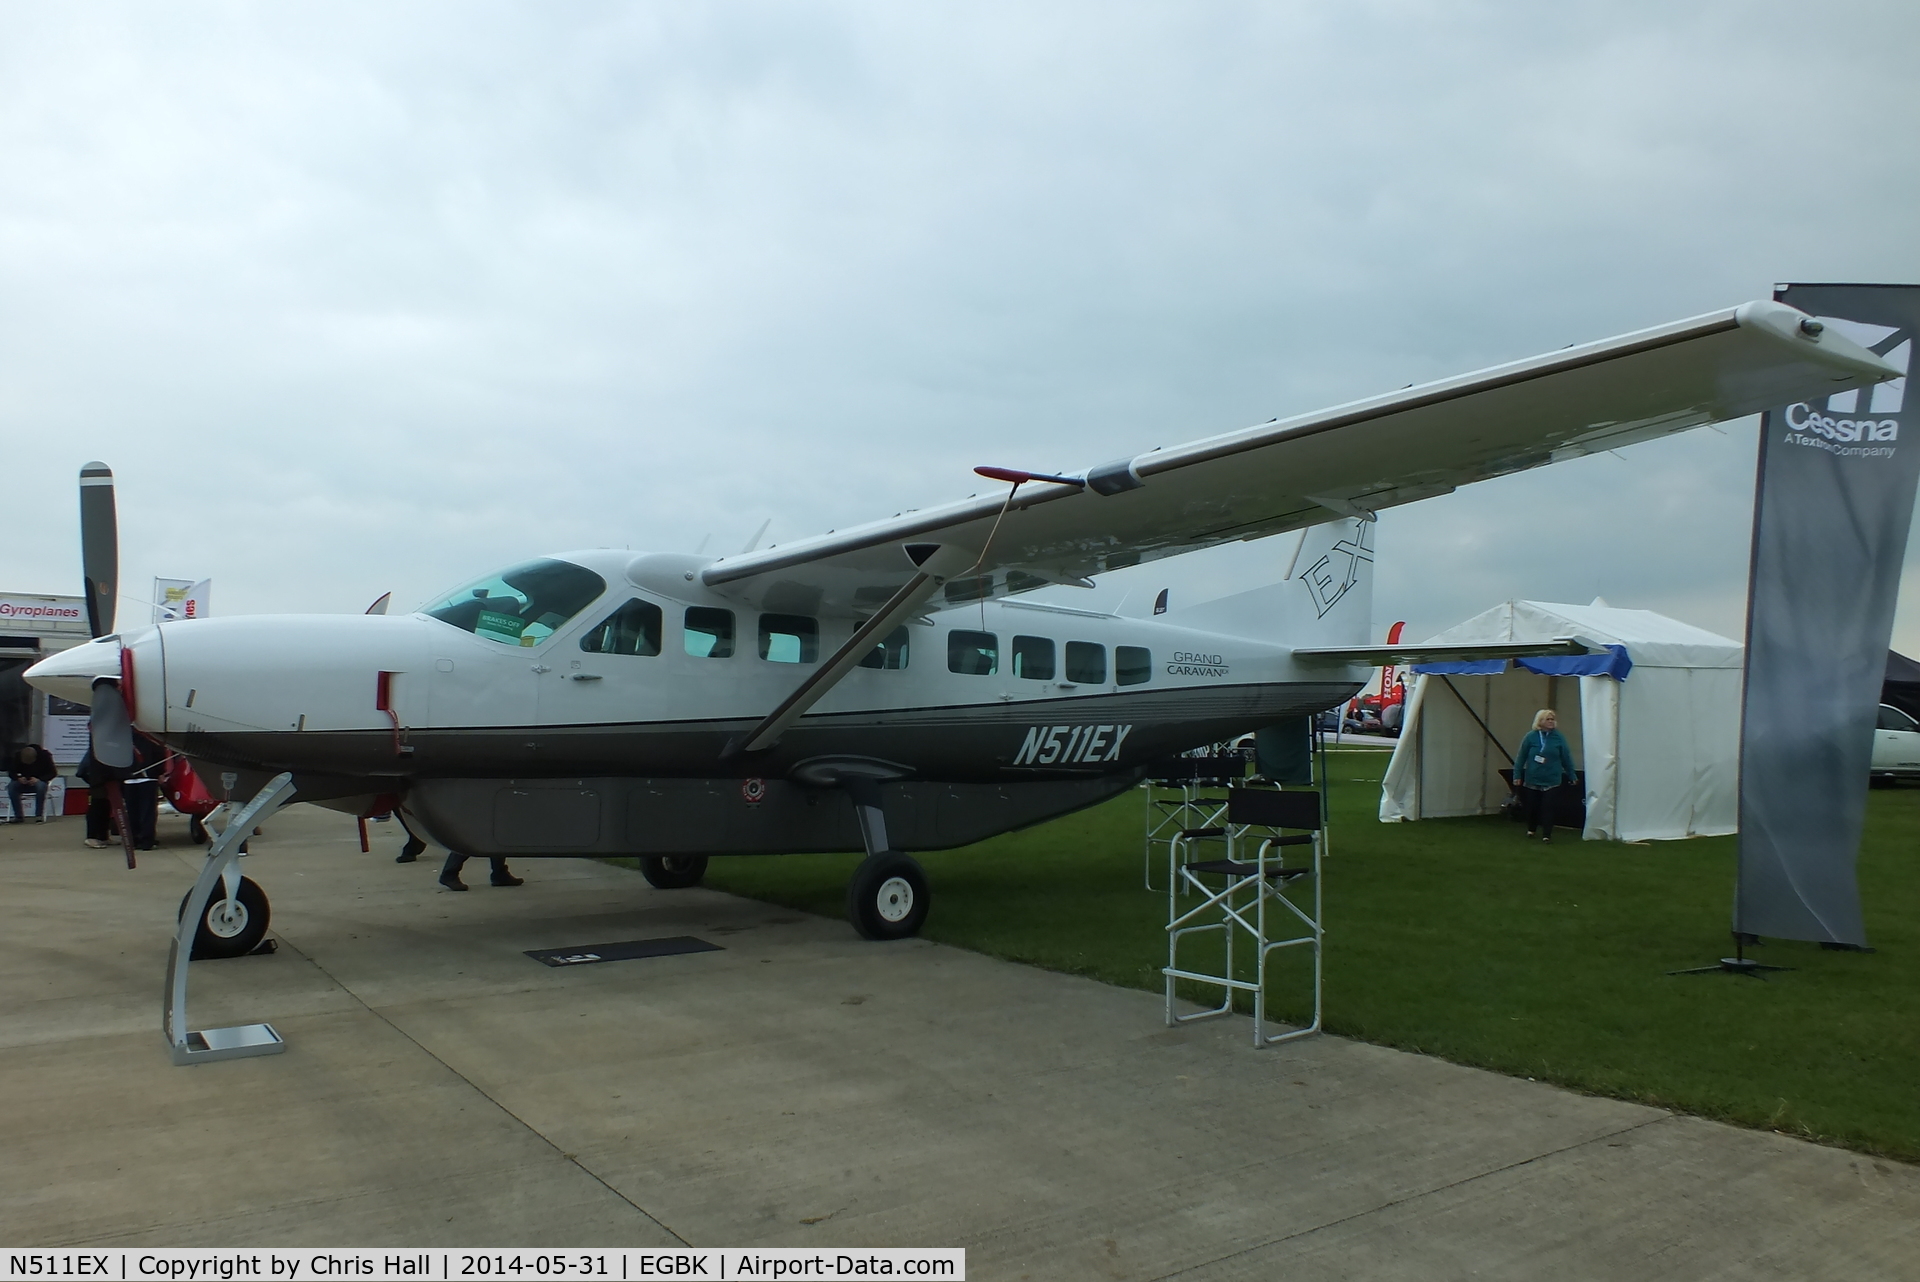 N511EX, 2013 Cessna 208B Grand Caravan C/N 208B5011, at AeroExpo 2014